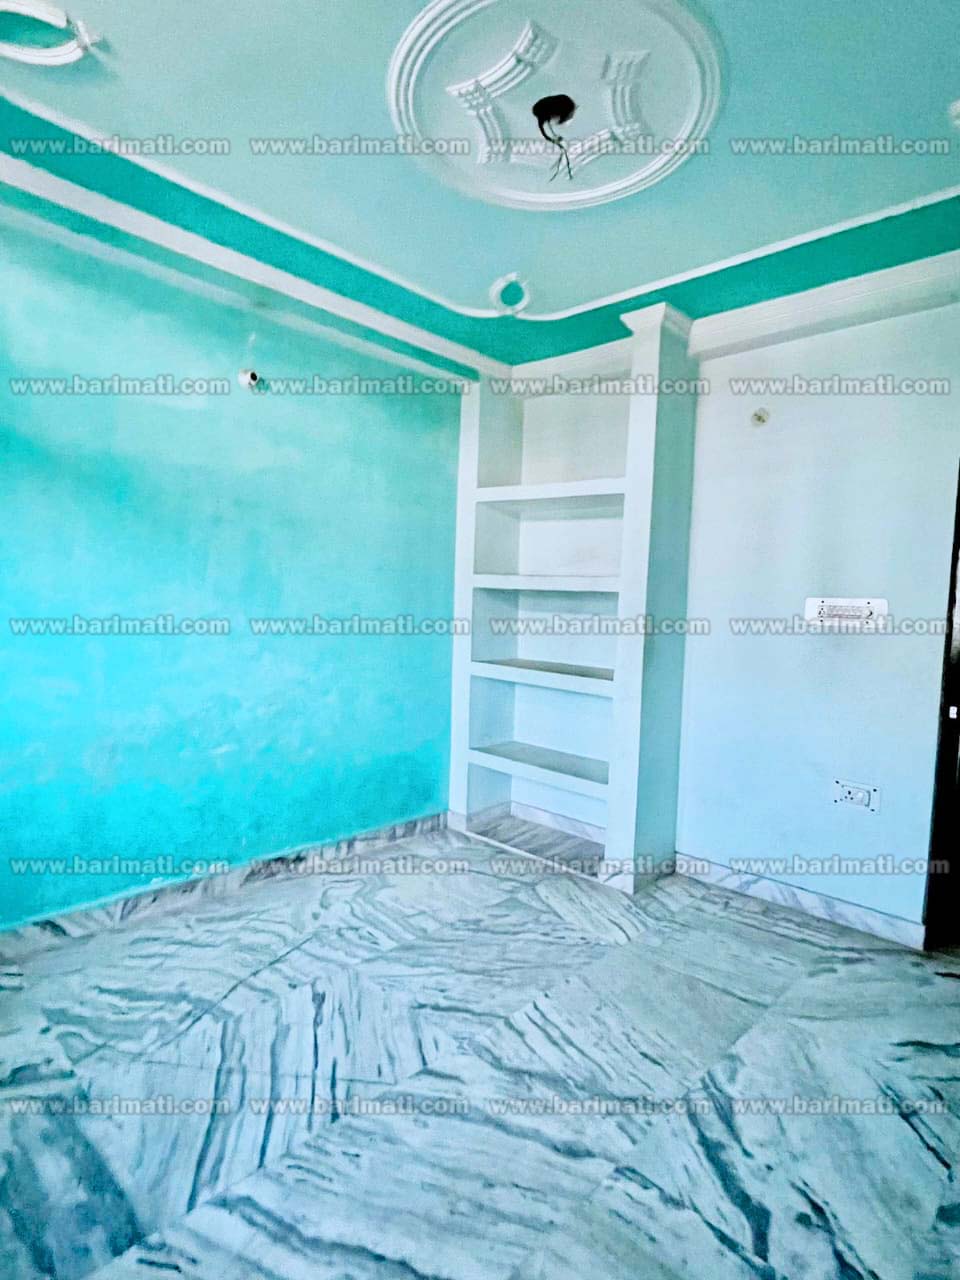 Comfortable living space: 2 BHK house for rent in Patna's East Lakshmi Nagar, under 7000